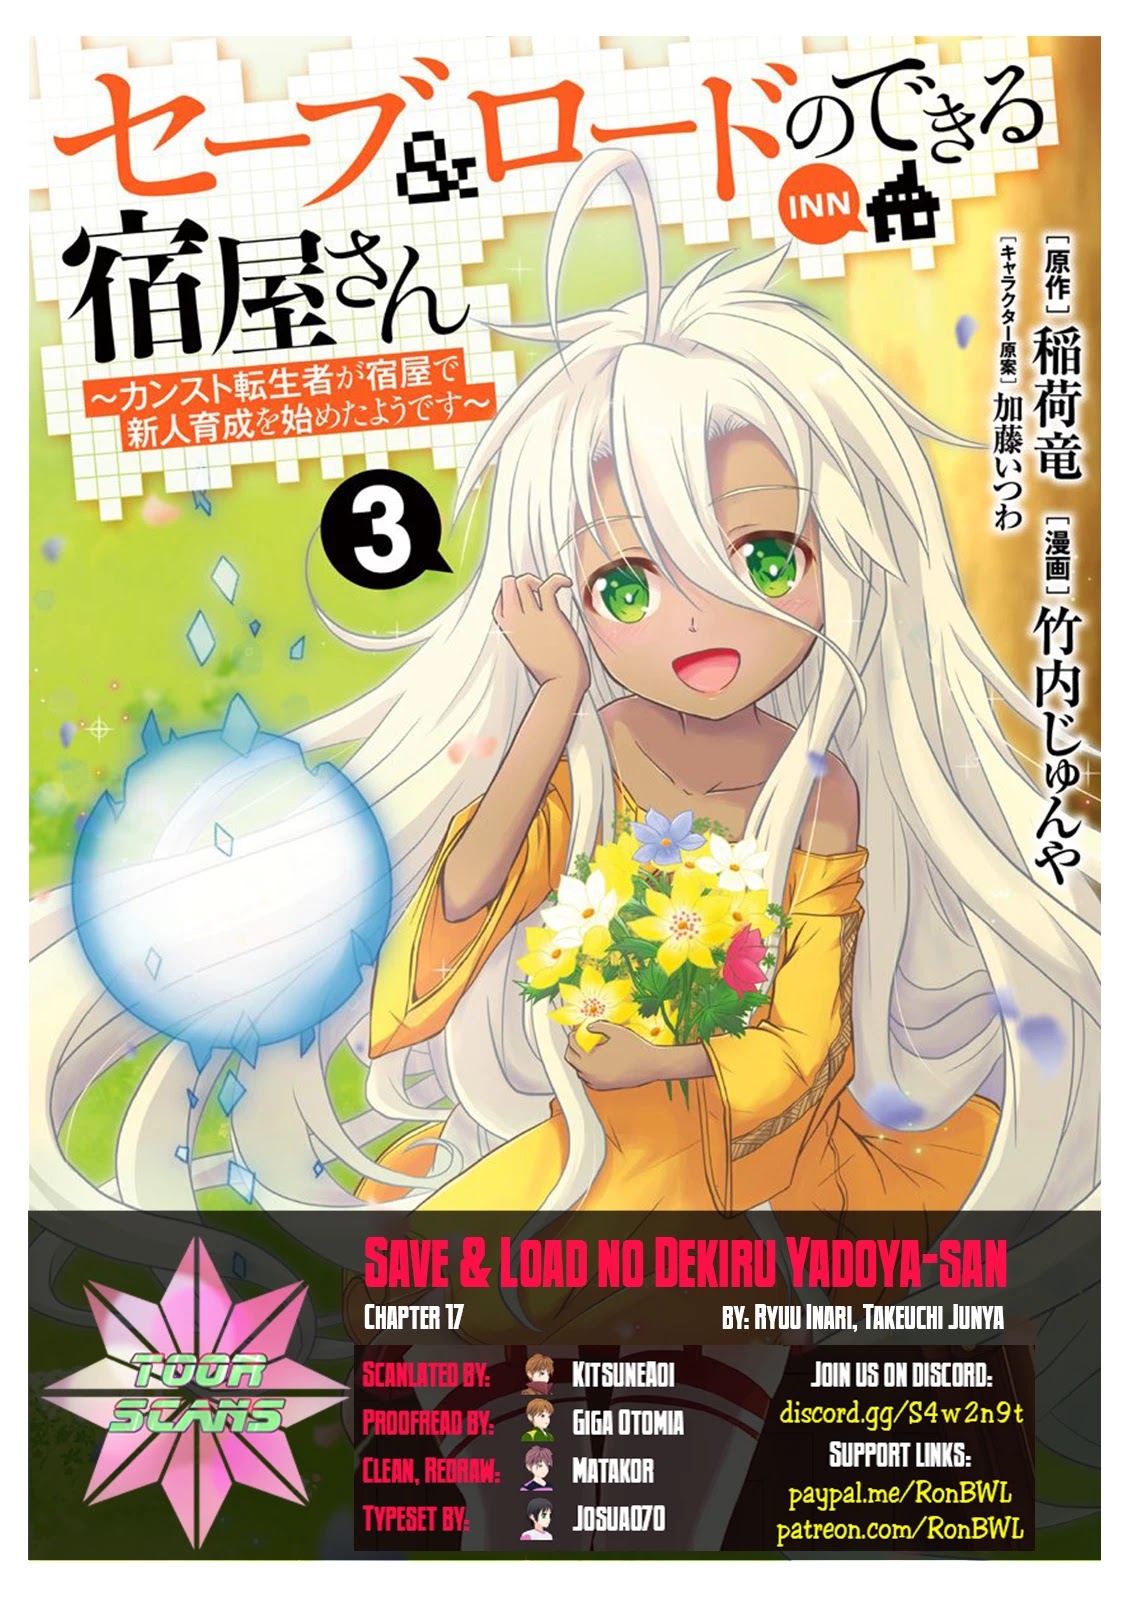 Save & Load No Dekiru Yadoya-San - Page 1